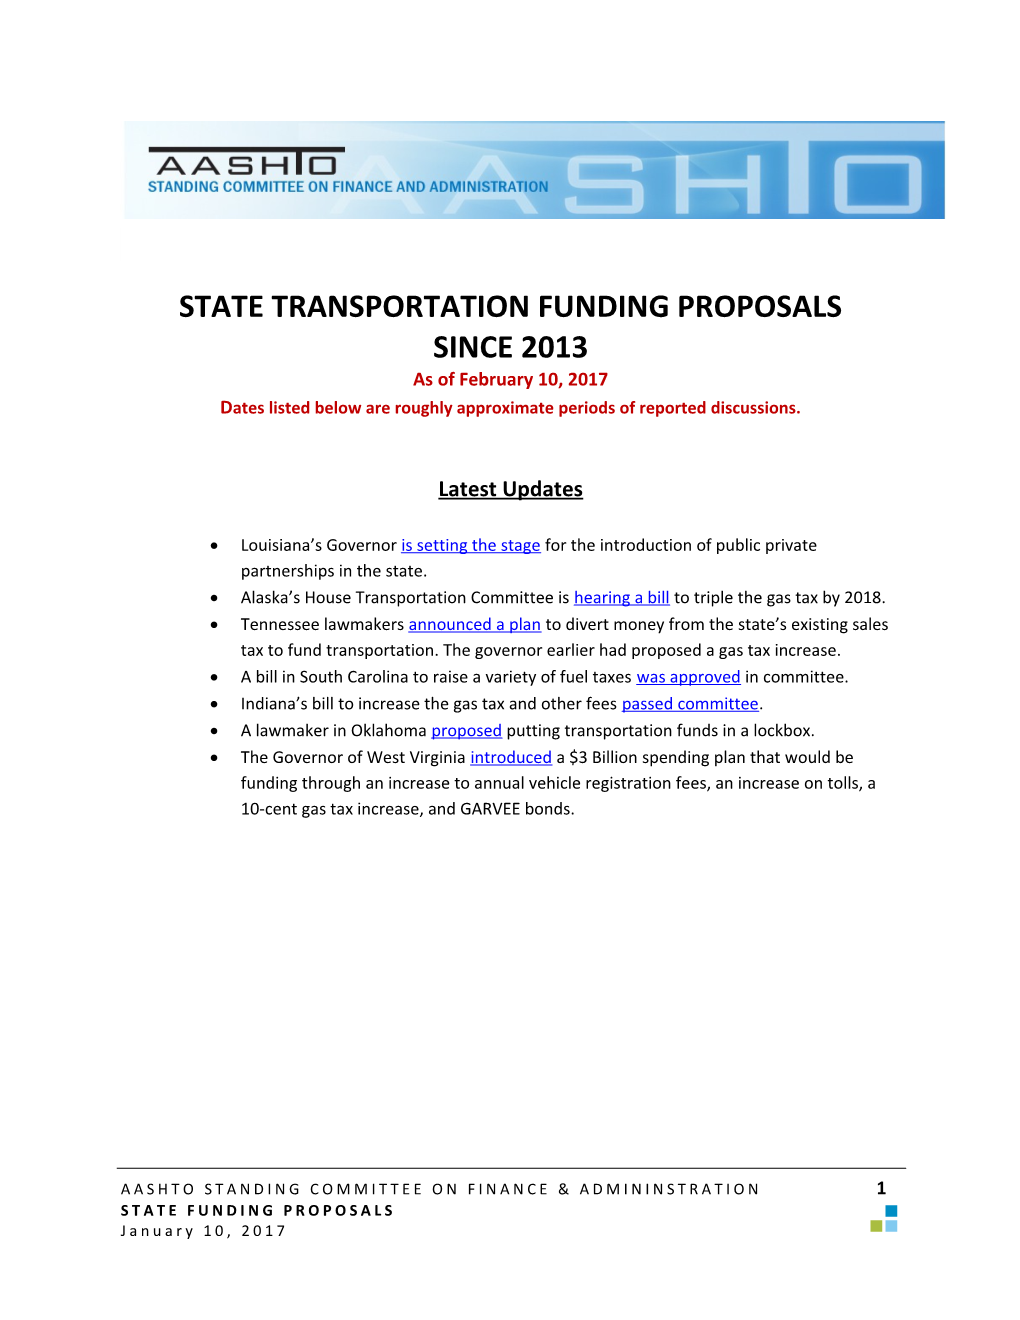 State Transportation Funding Proposals